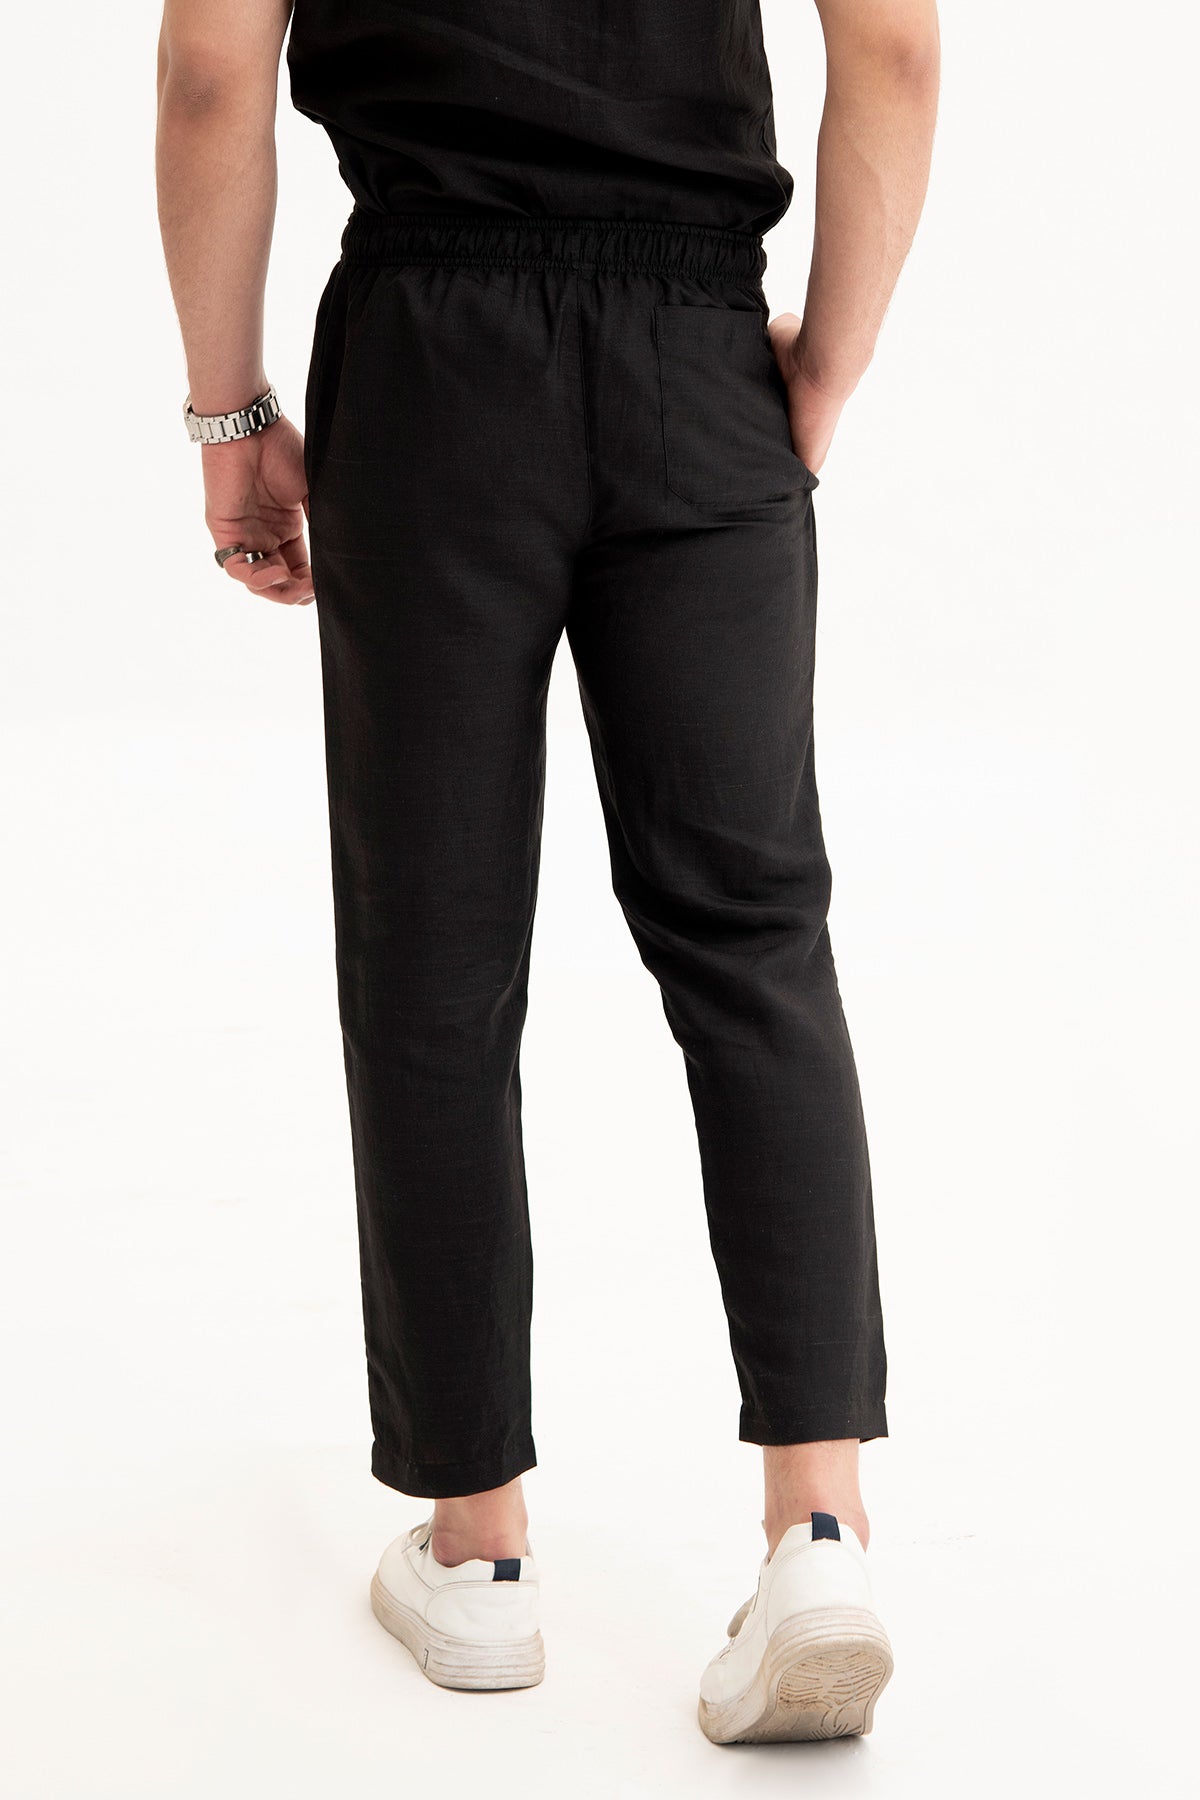 Black Irish Linen trouser